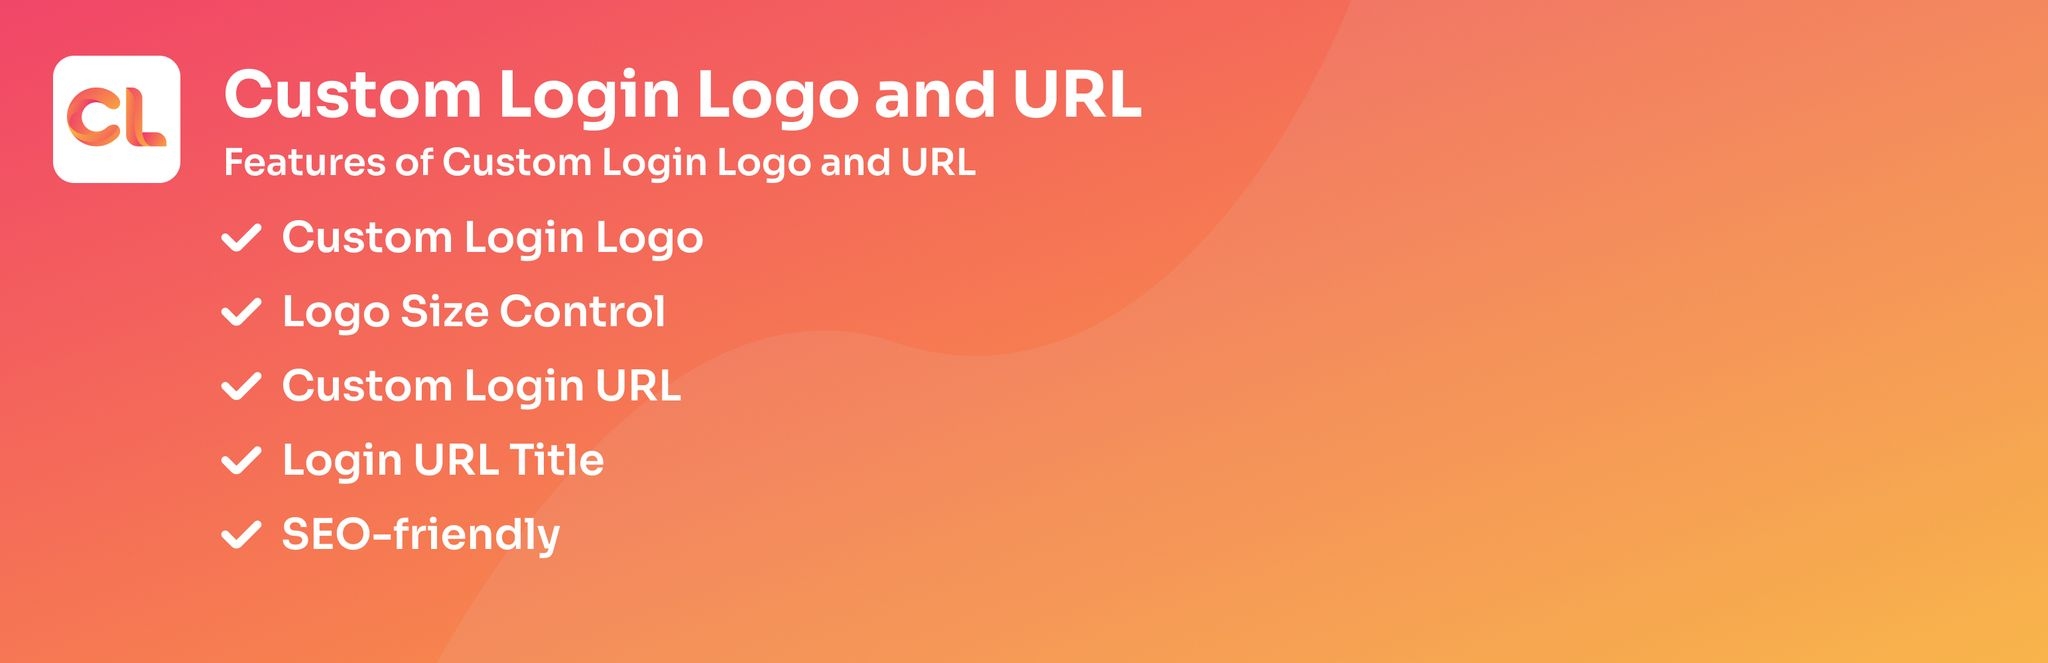 Custom Login Logo and URL